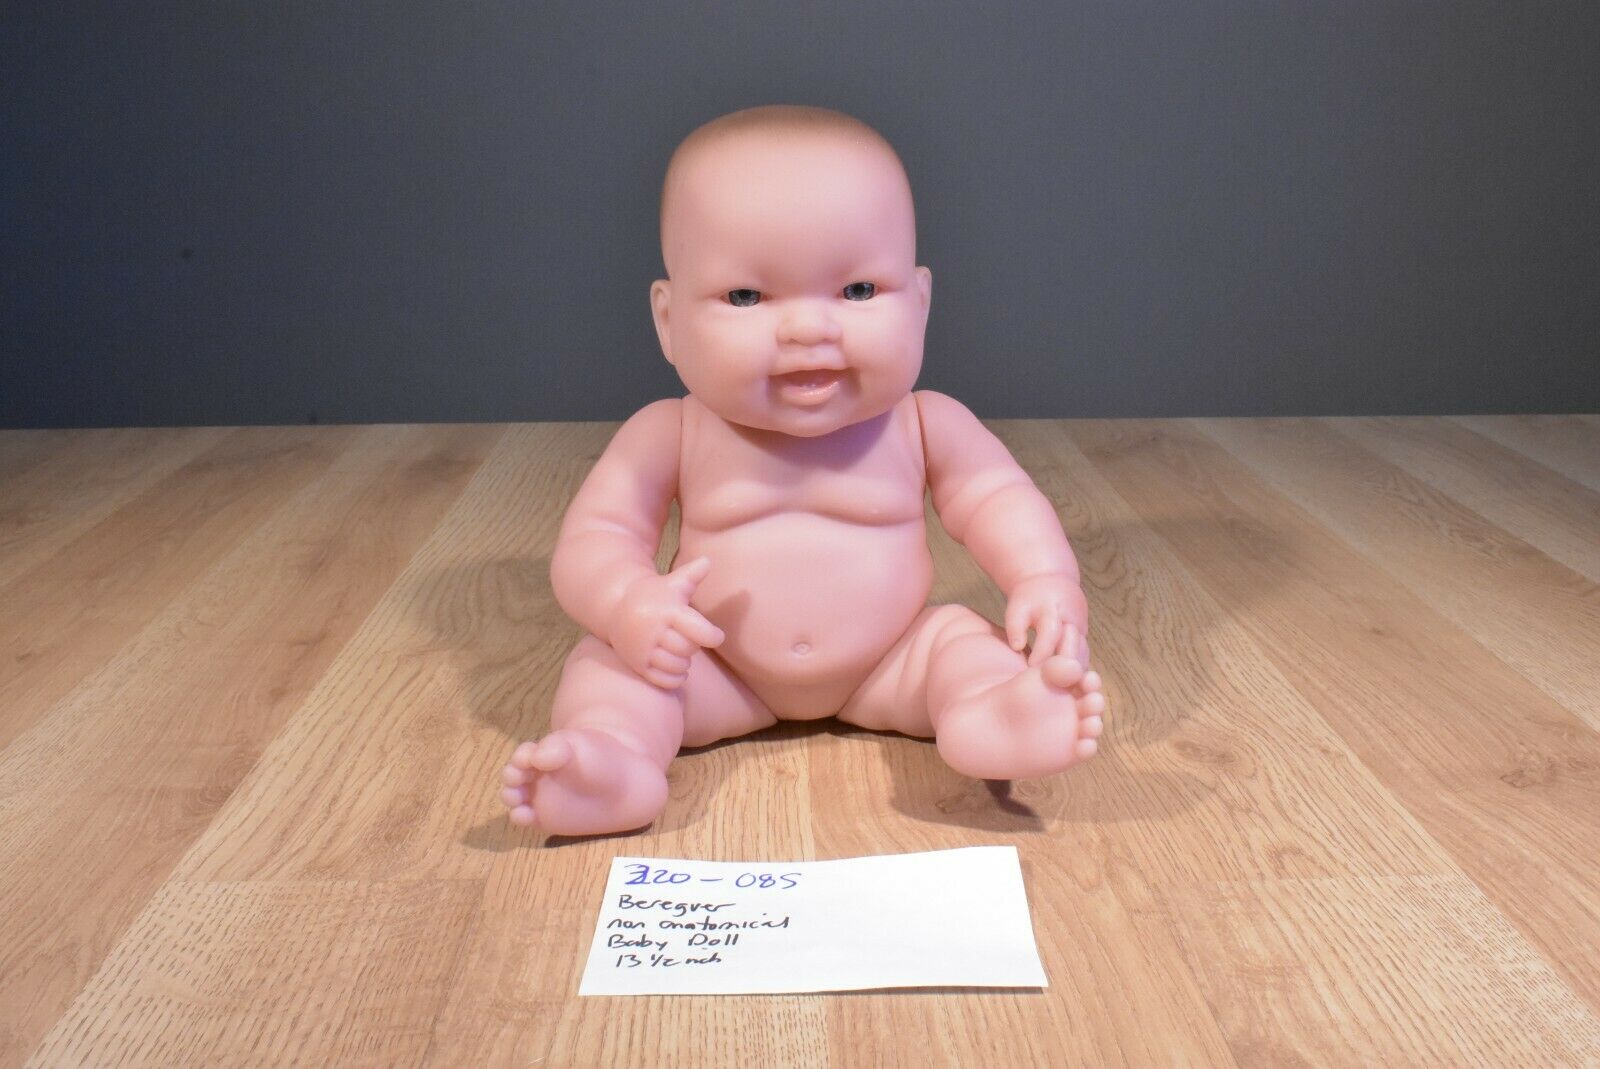 Berenguer Realistic Vinyl Plump Chubby Baby Doll(320-085)